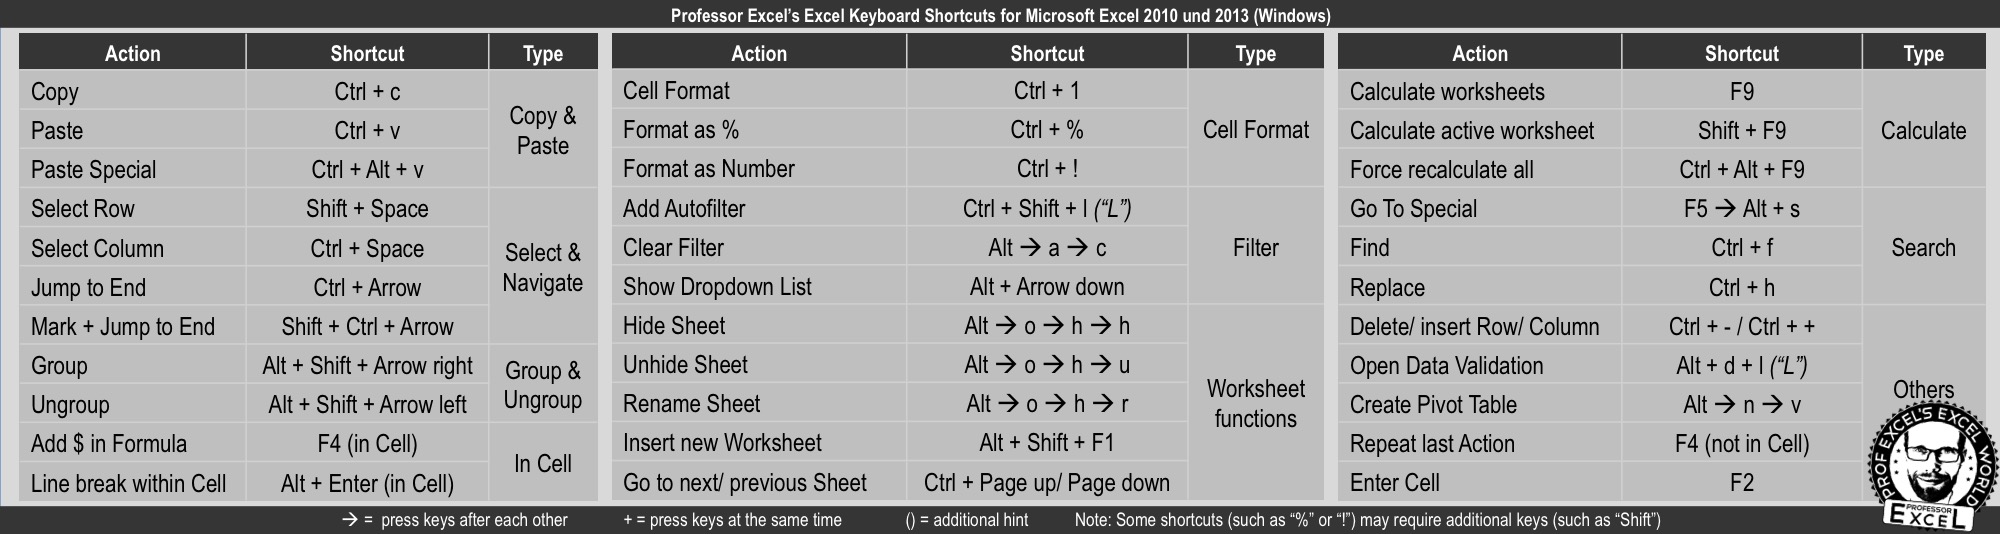 excel, keyboard, shortcut, 2010, 2013, windows